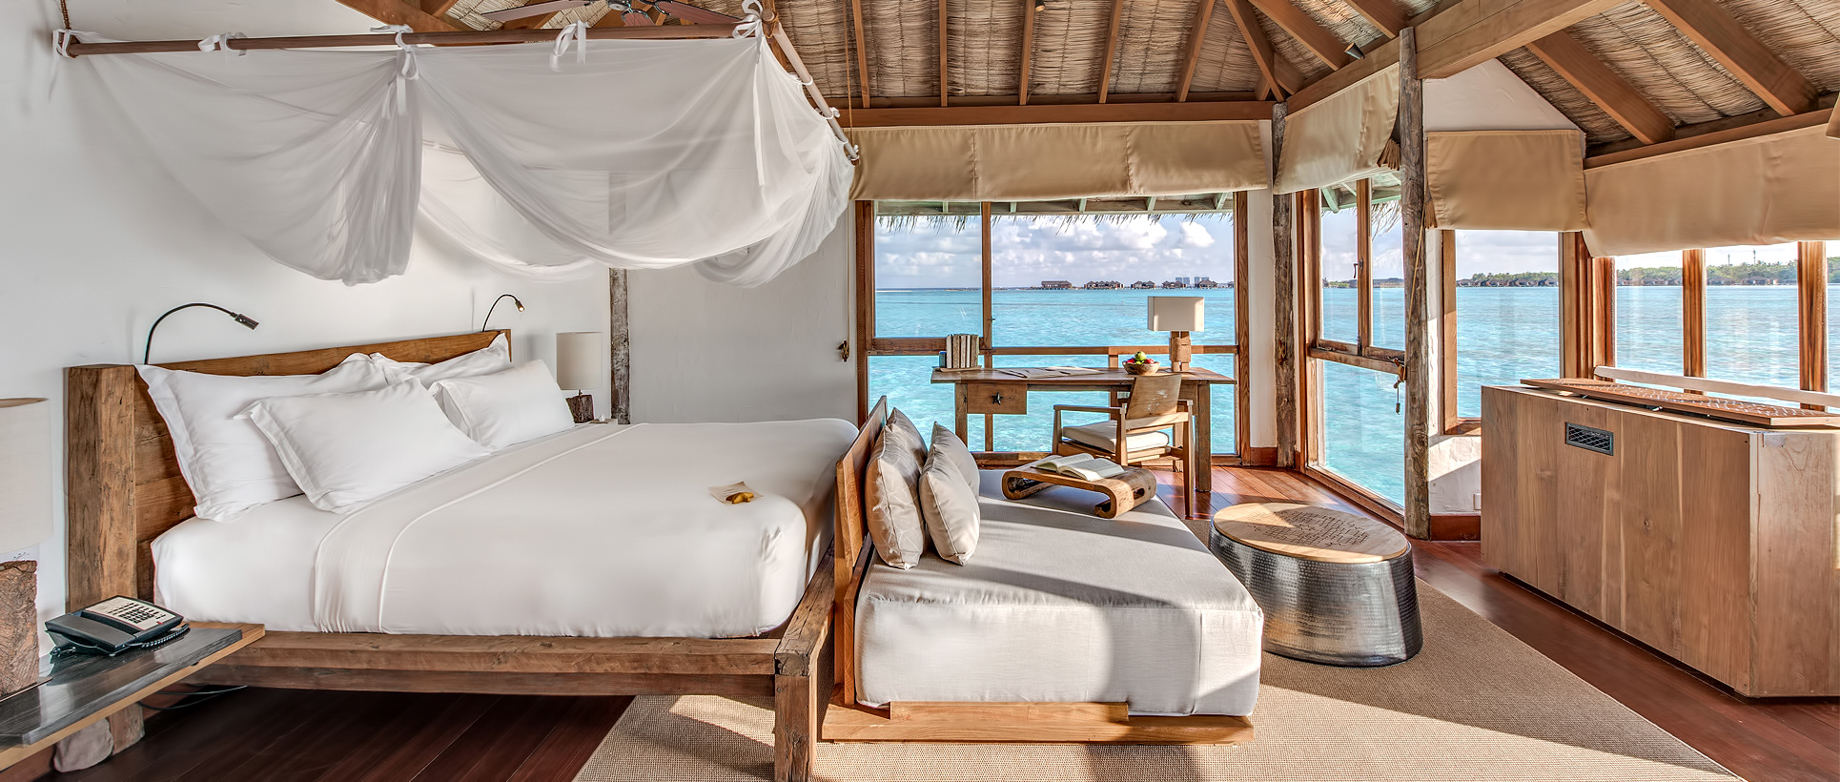 Gili Lankanfushi Resort – North Male Atoll, Maldives – Overwater Villa Bedroom Ocean View